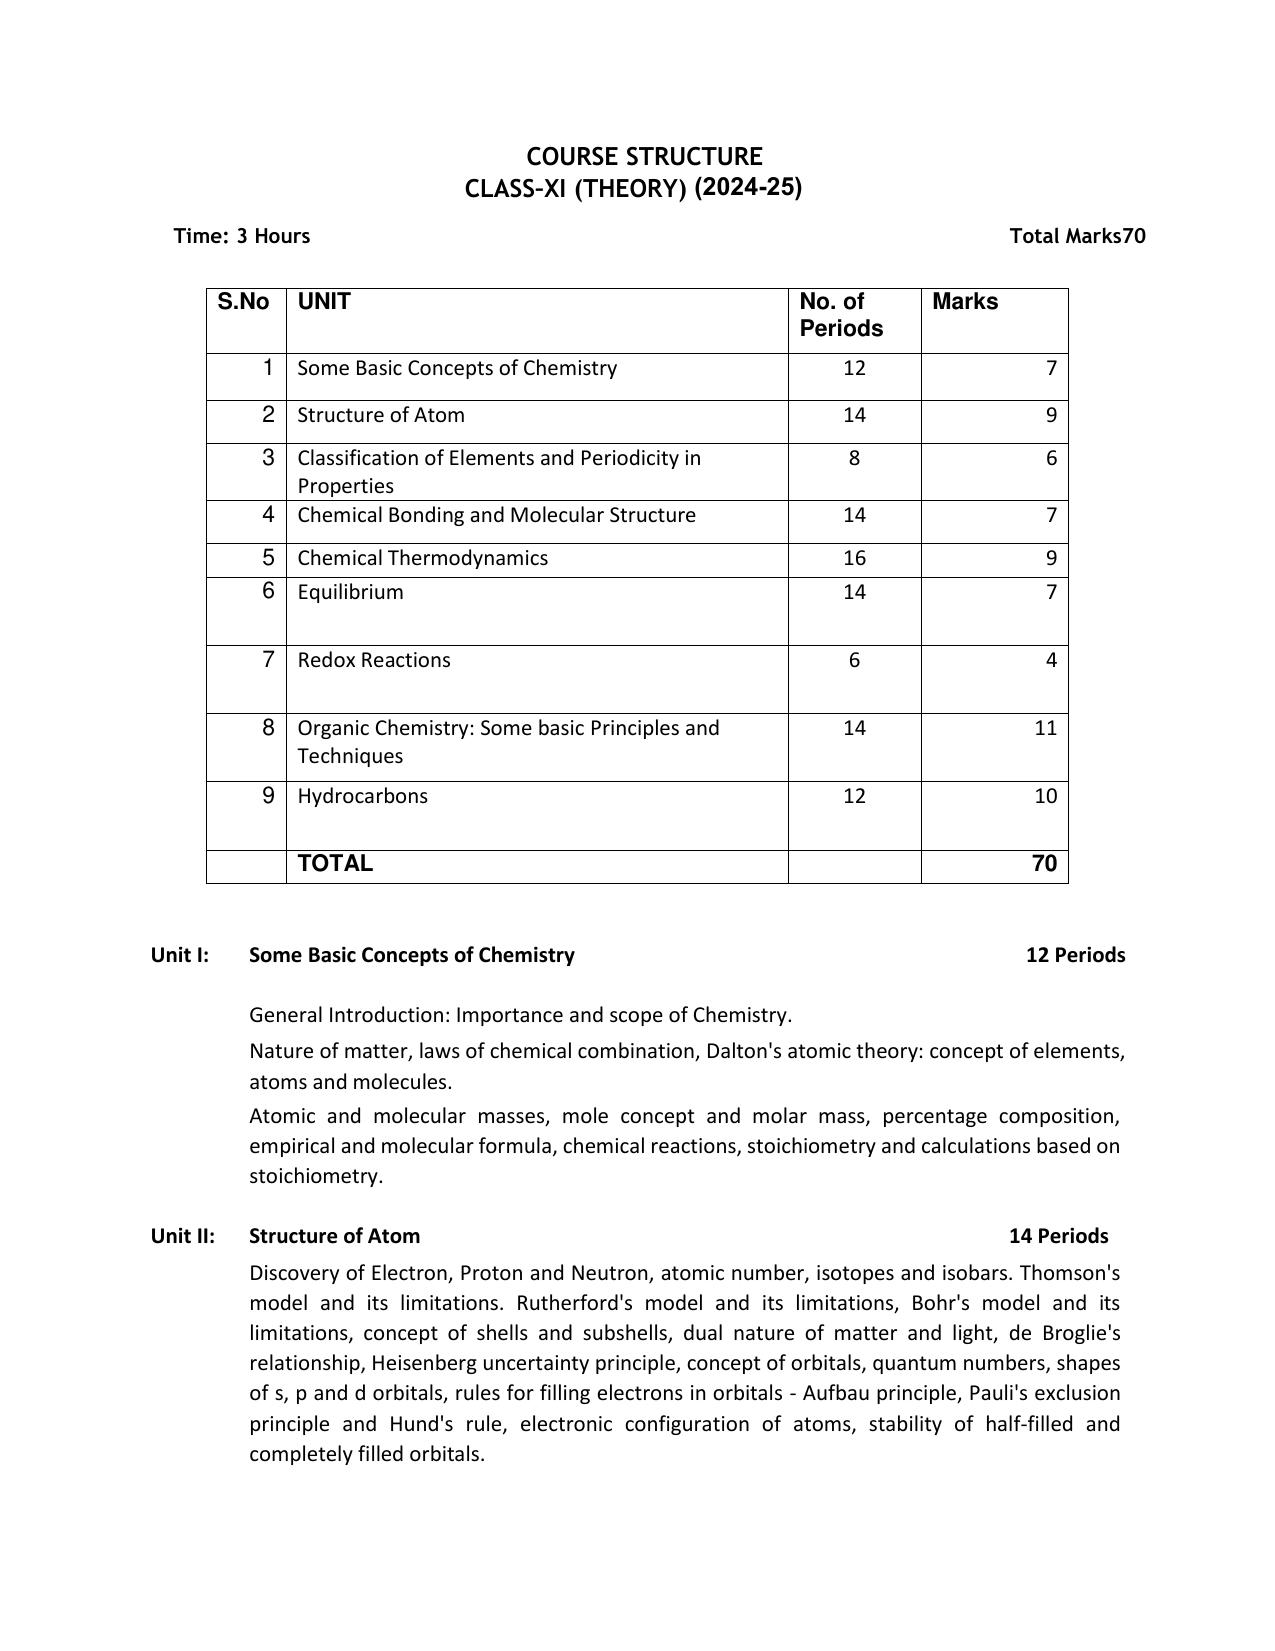 CBSE Class 11 & 12 Syllabus 2022-23 - Chemistry - Page 2